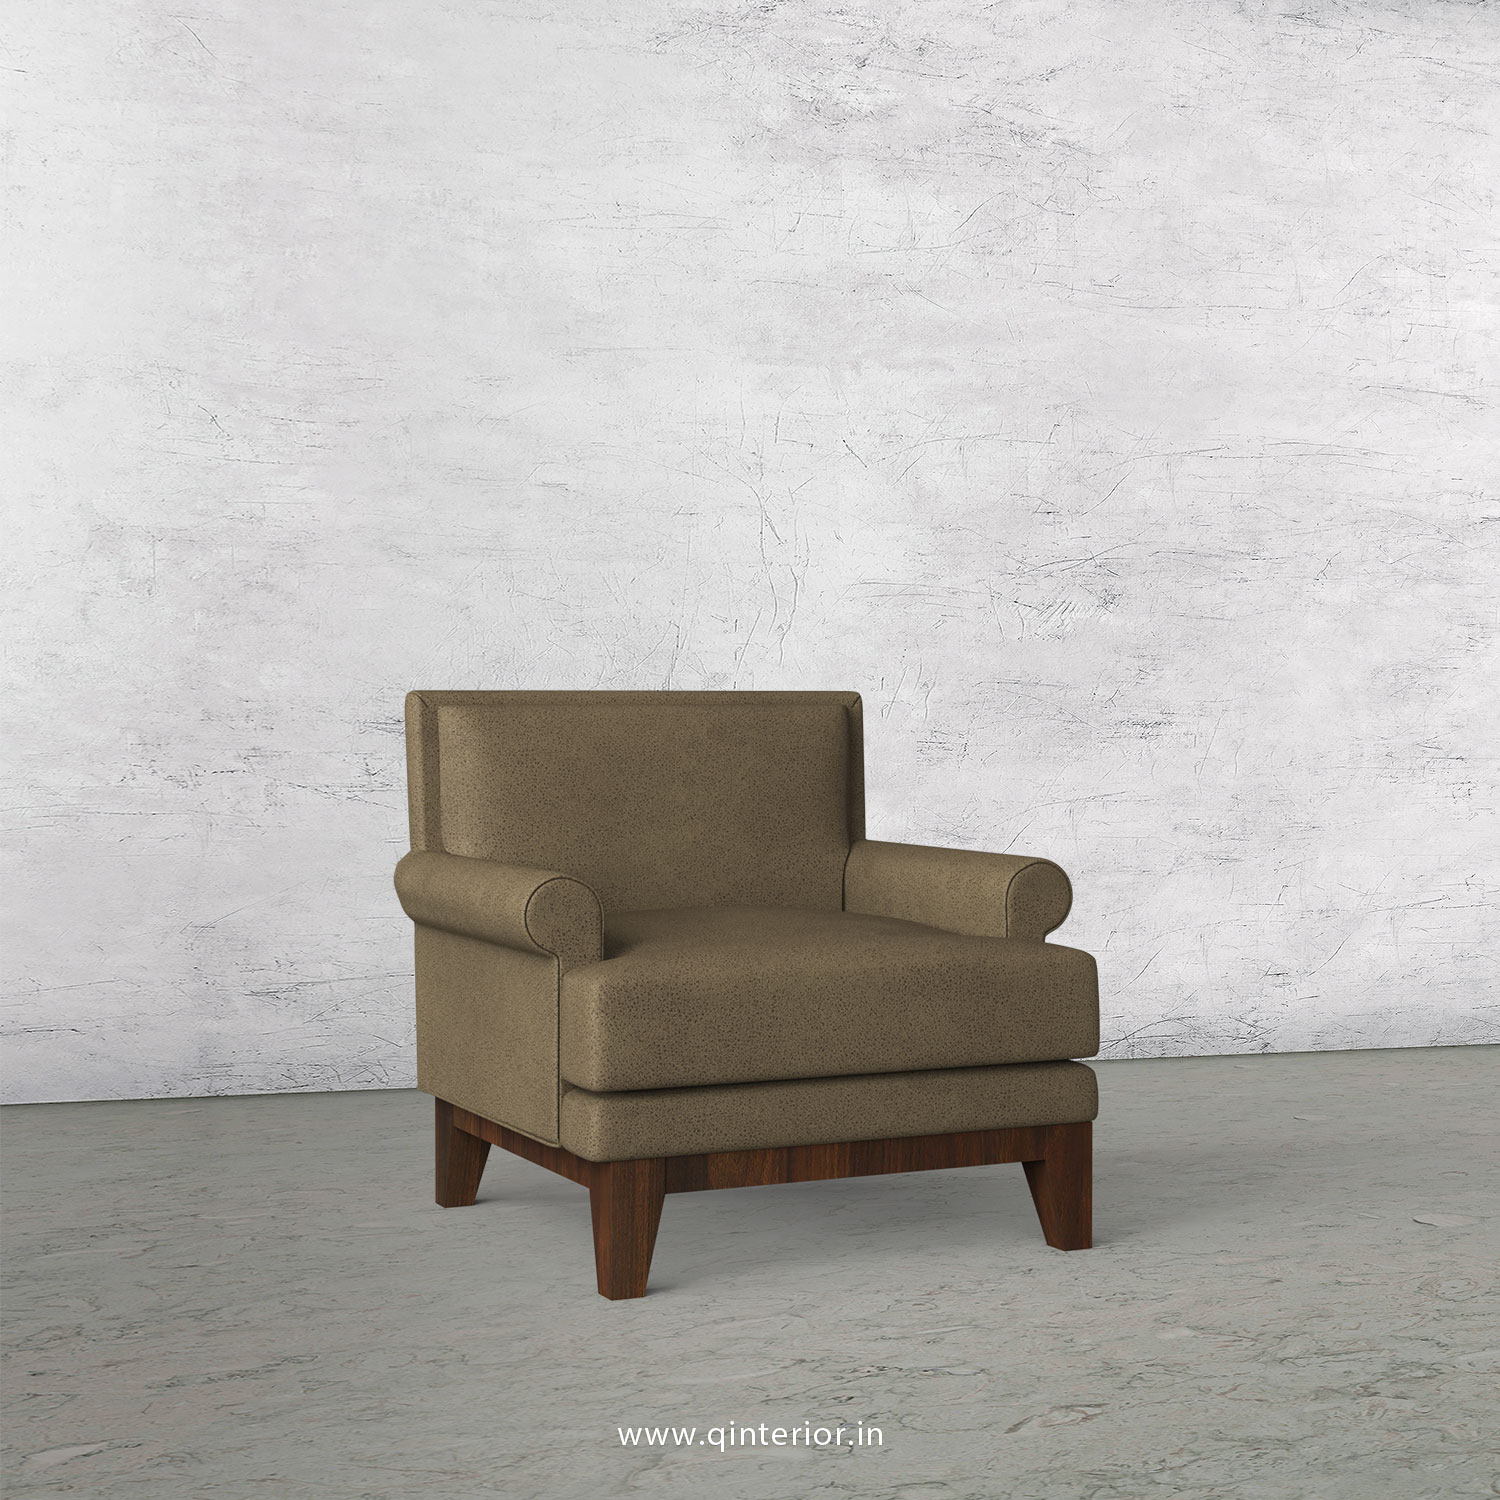 Aviana 1 Seater Sofa in Fab Leather Fabric - SFA001 FL06